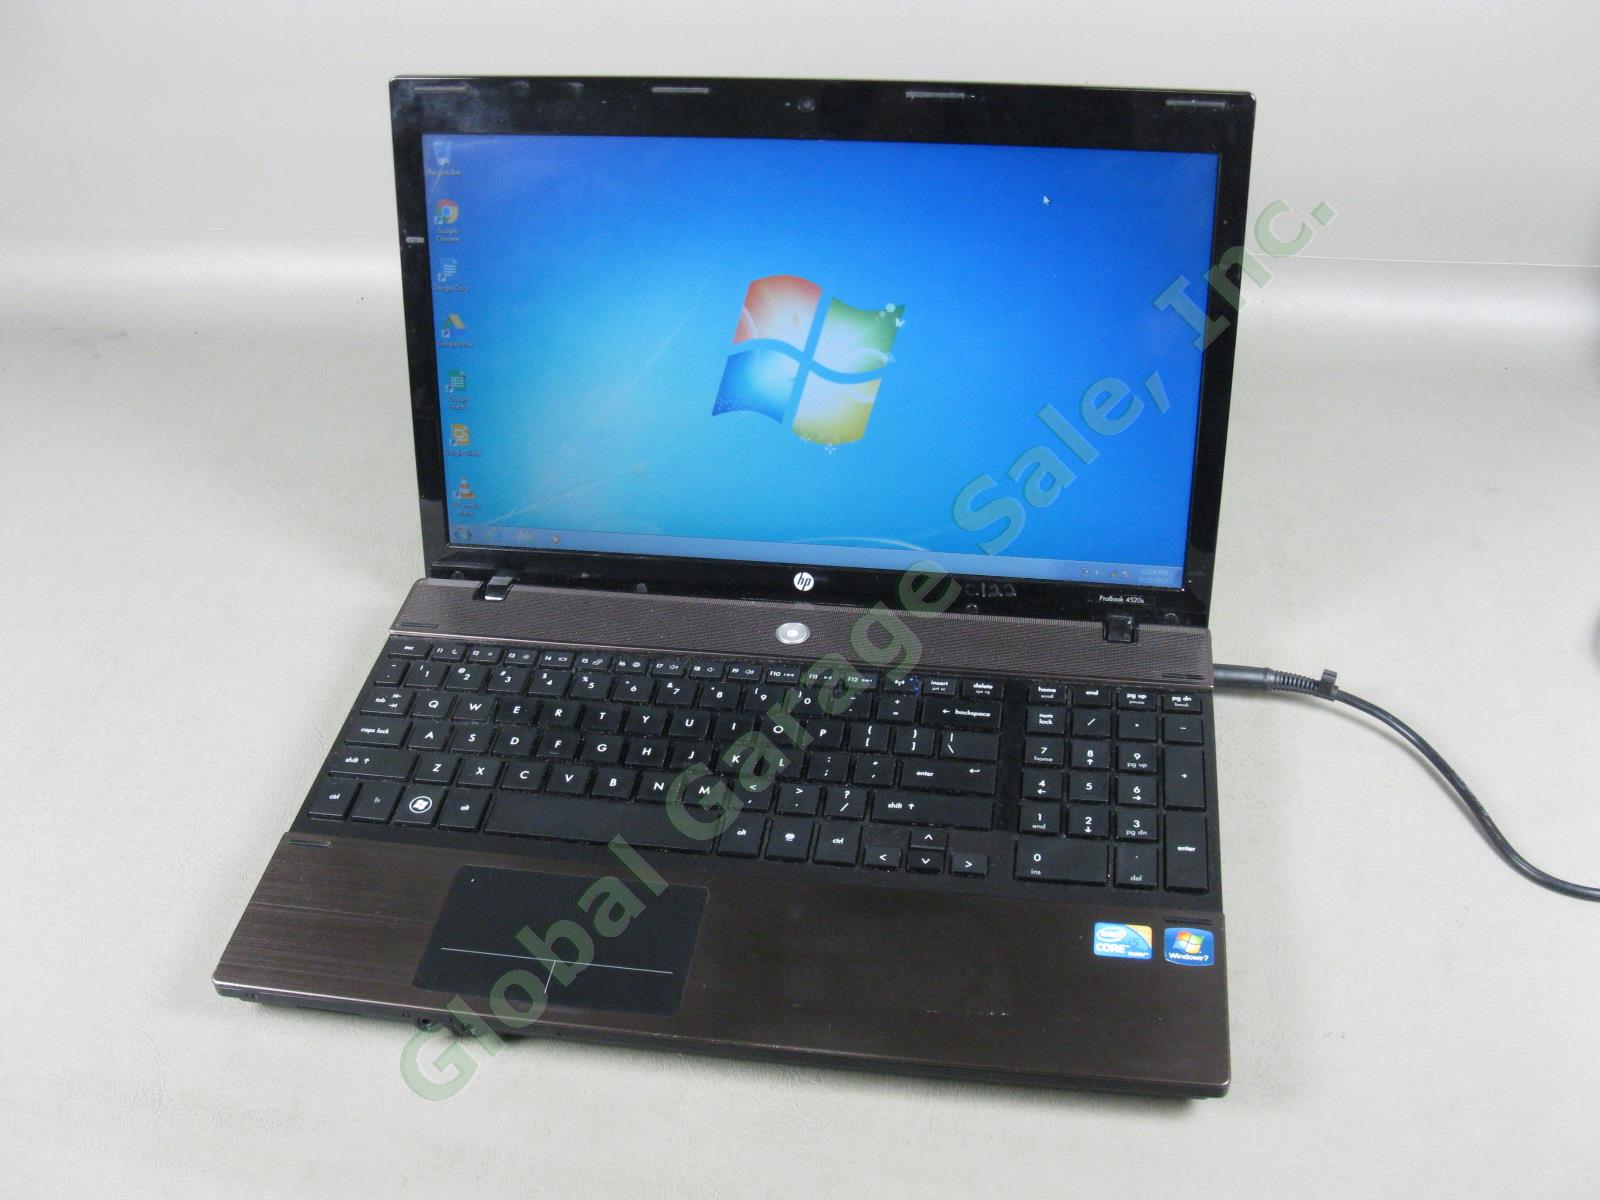 HP 4520s Laptop Computer Intel Core i5 2.67GHz 2GB 500GB HDD Windows 7 Pro NR!